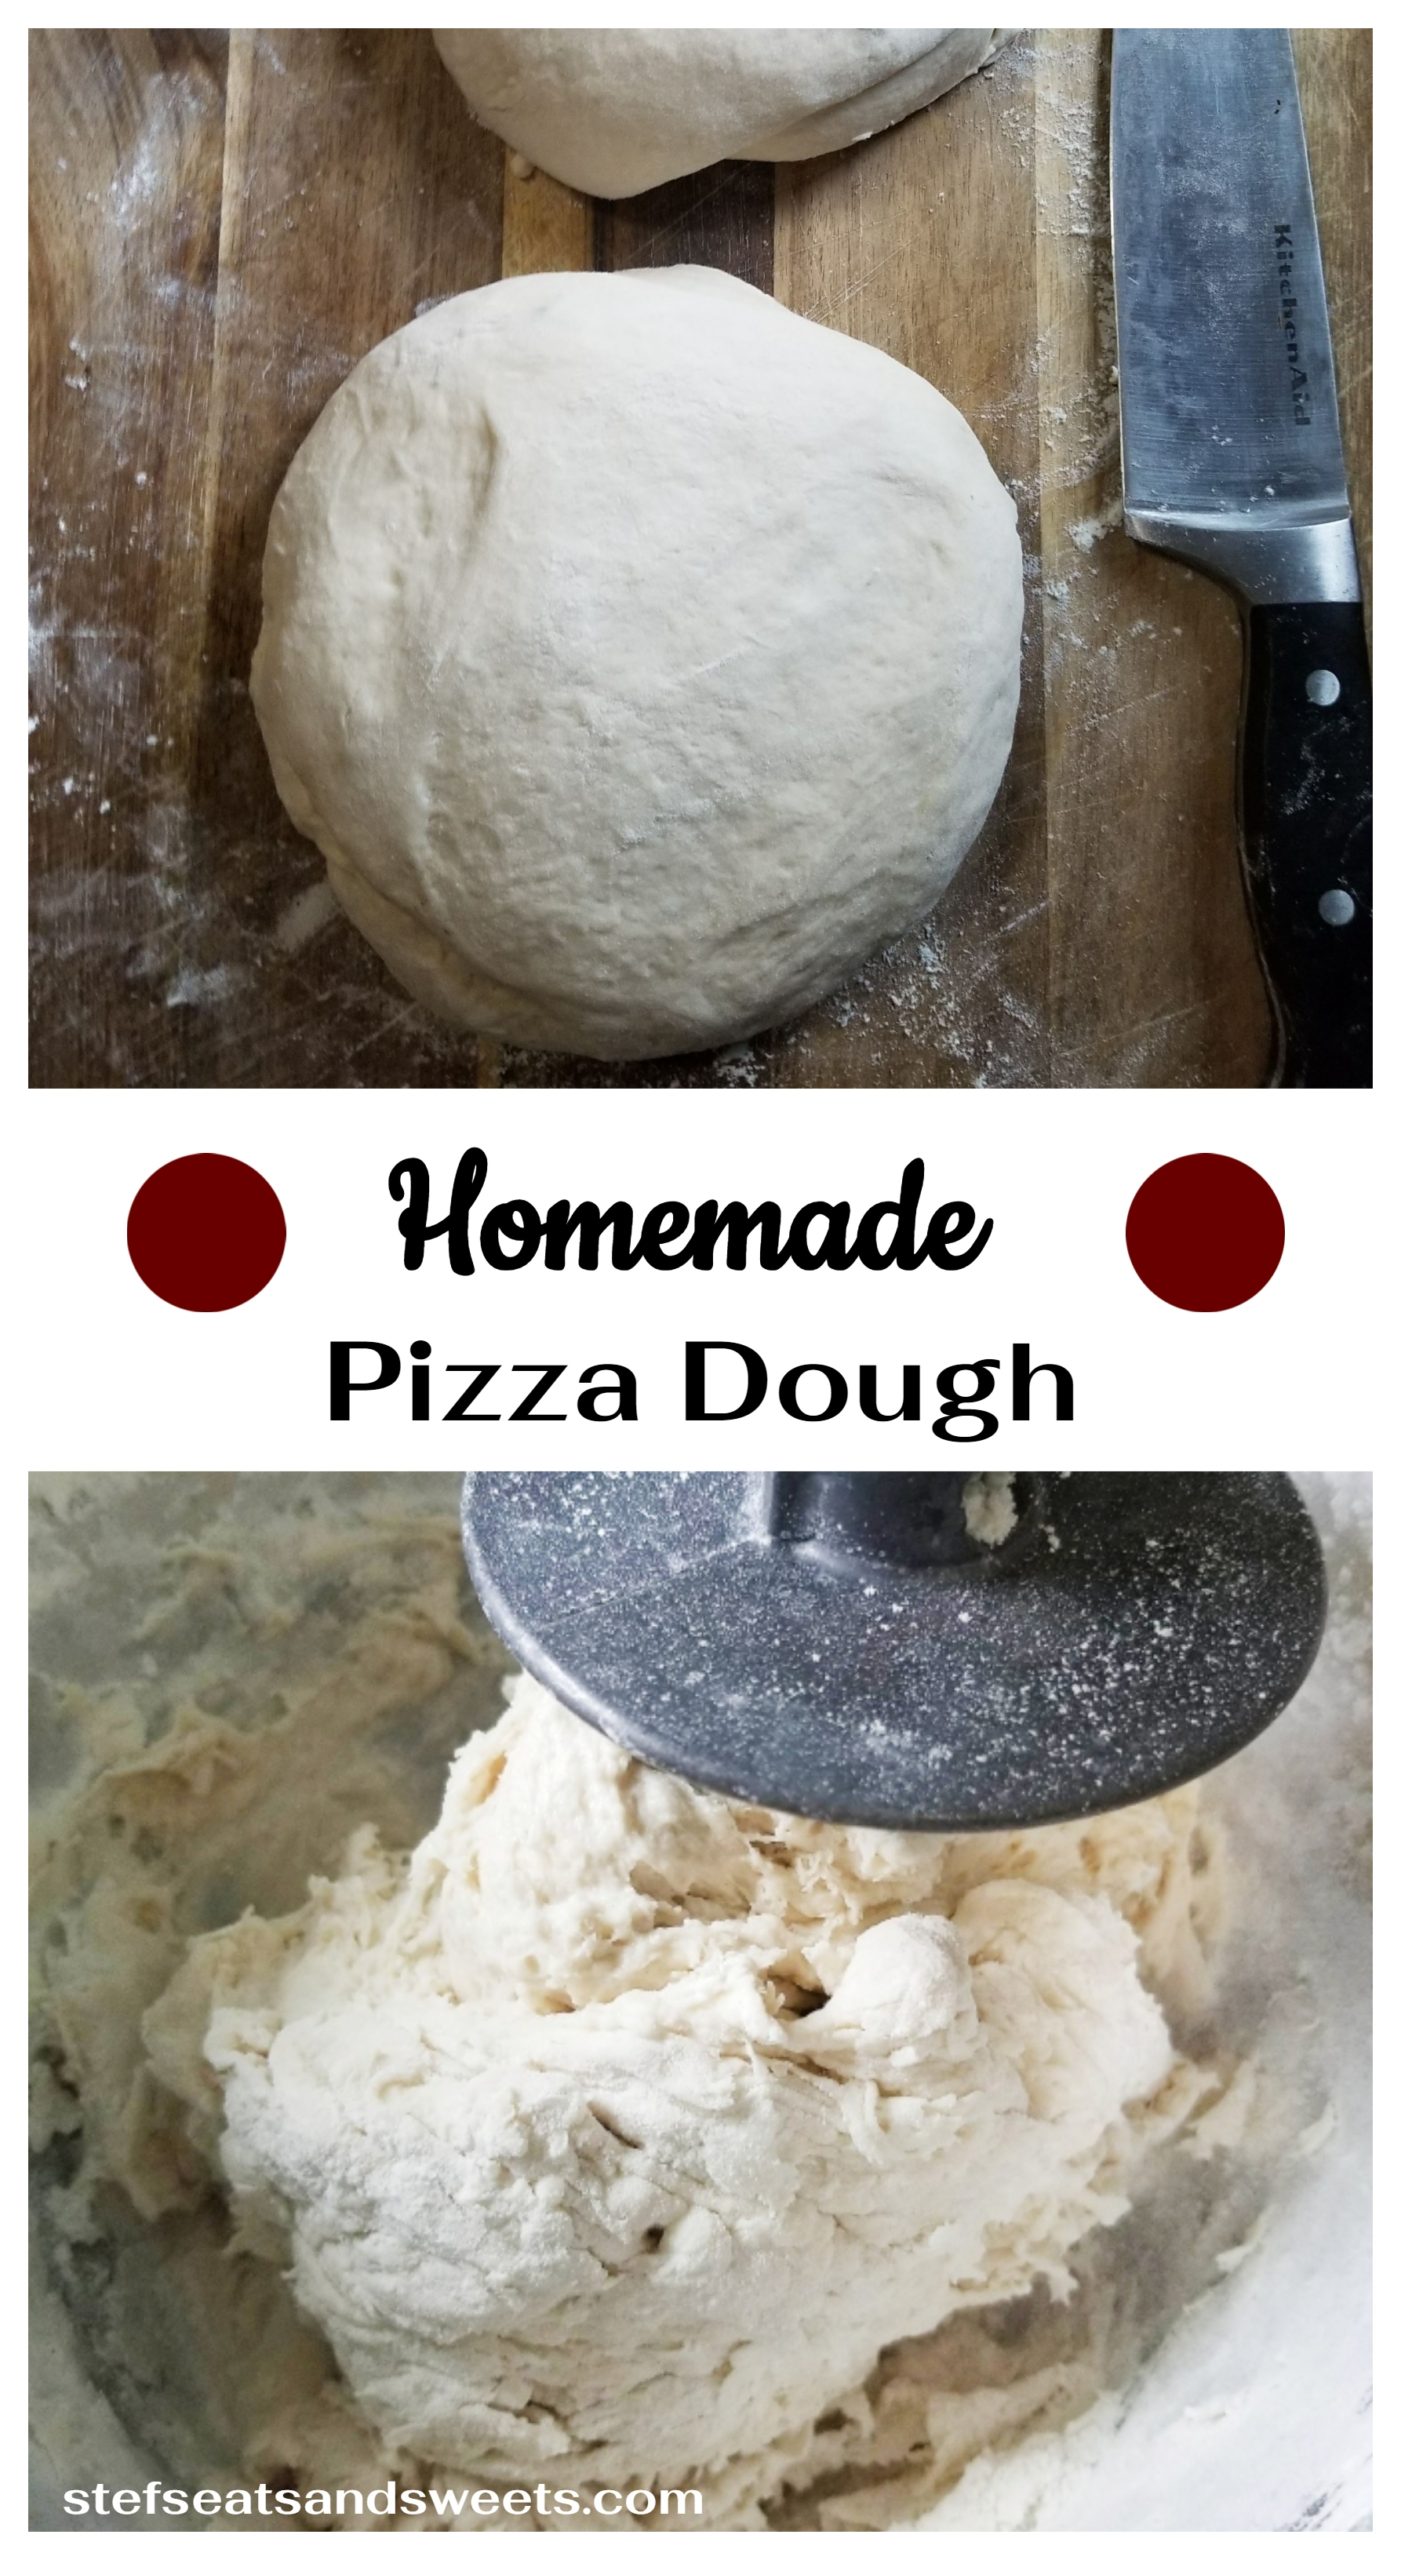 The best Homemade Pizza Dough